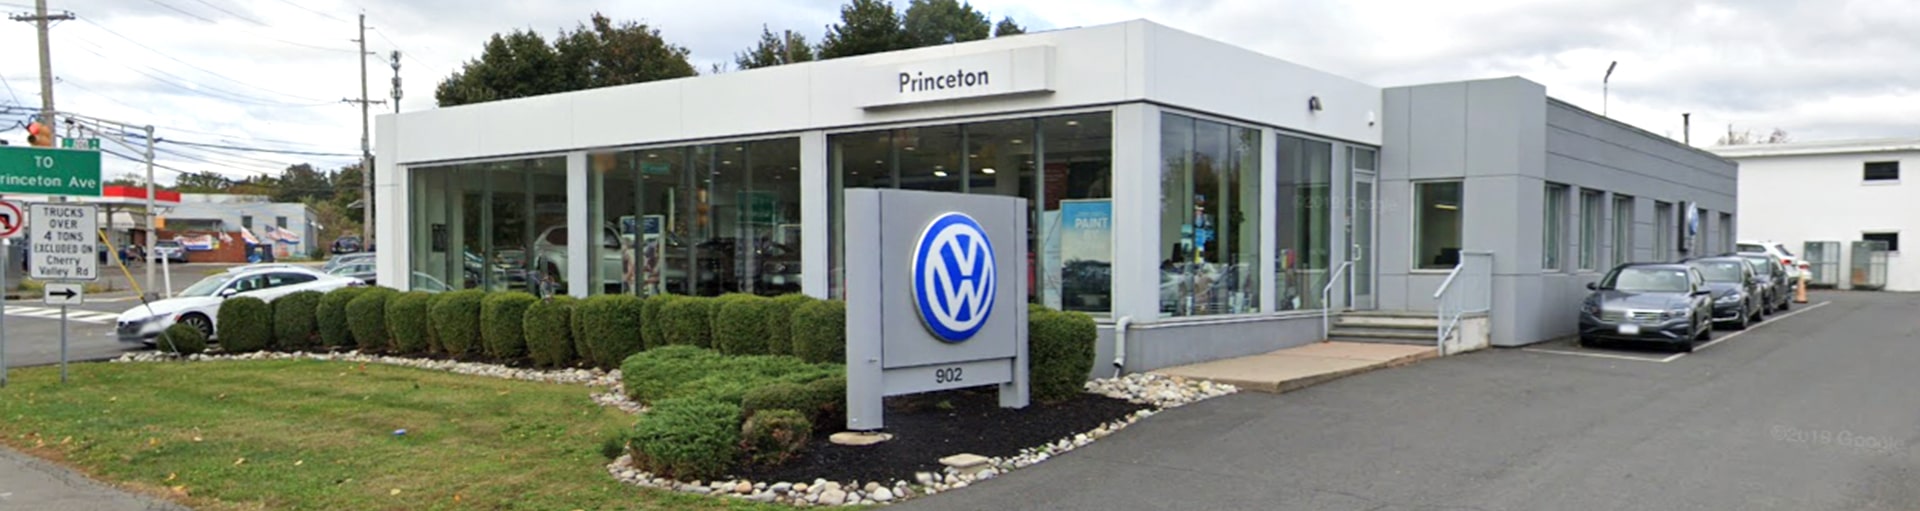 Volkswagen Princeton Transmission Fluid Exchange